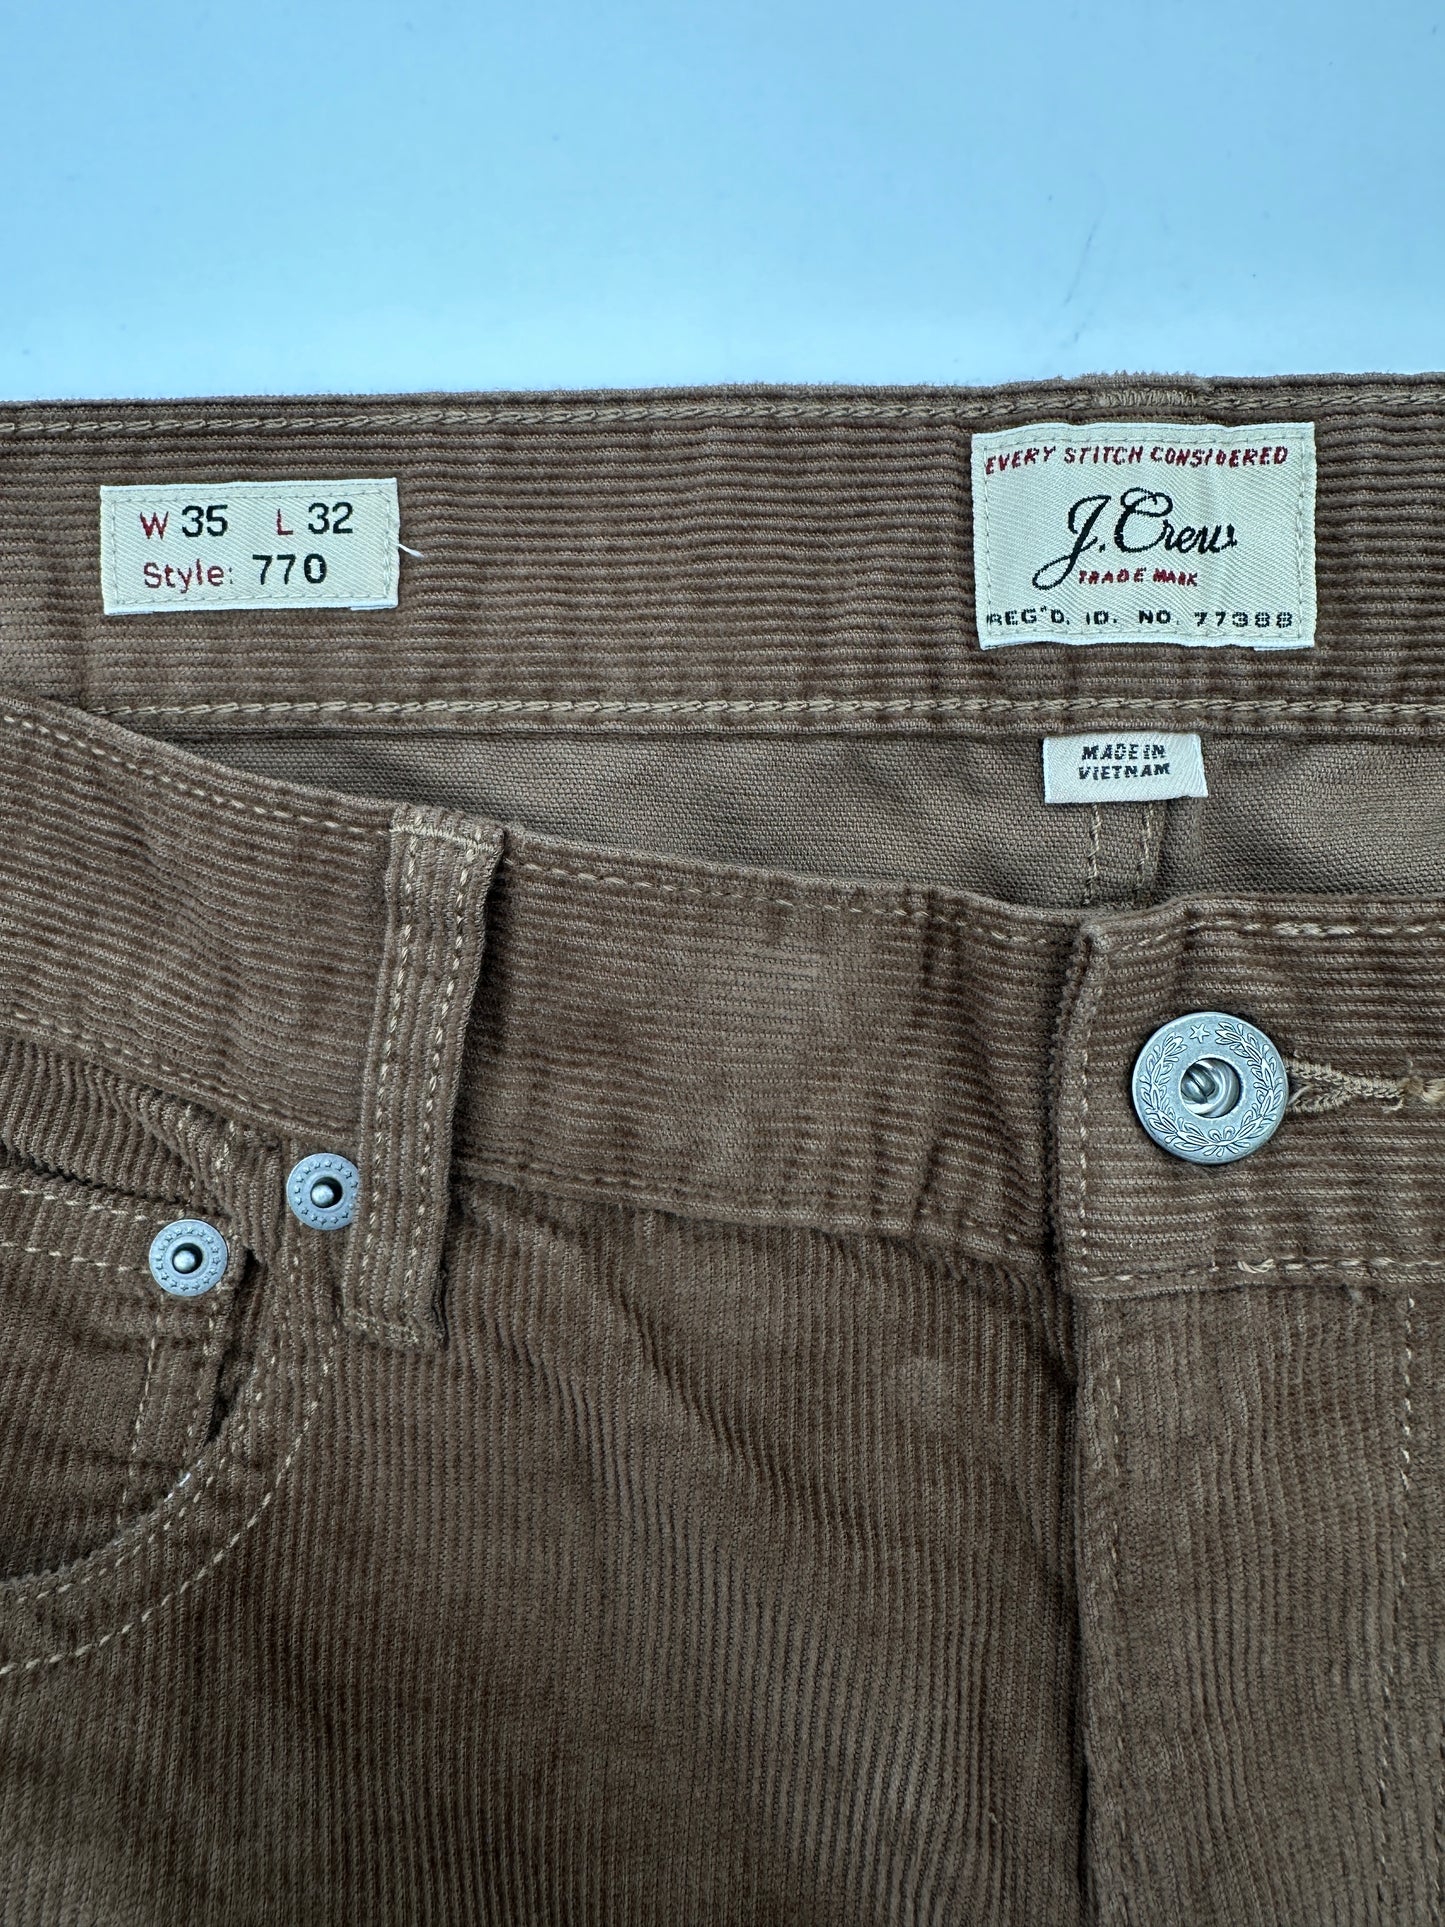 J.Crew Men's Size 35x32 (marked) Cognac Brown Corduroy Pants